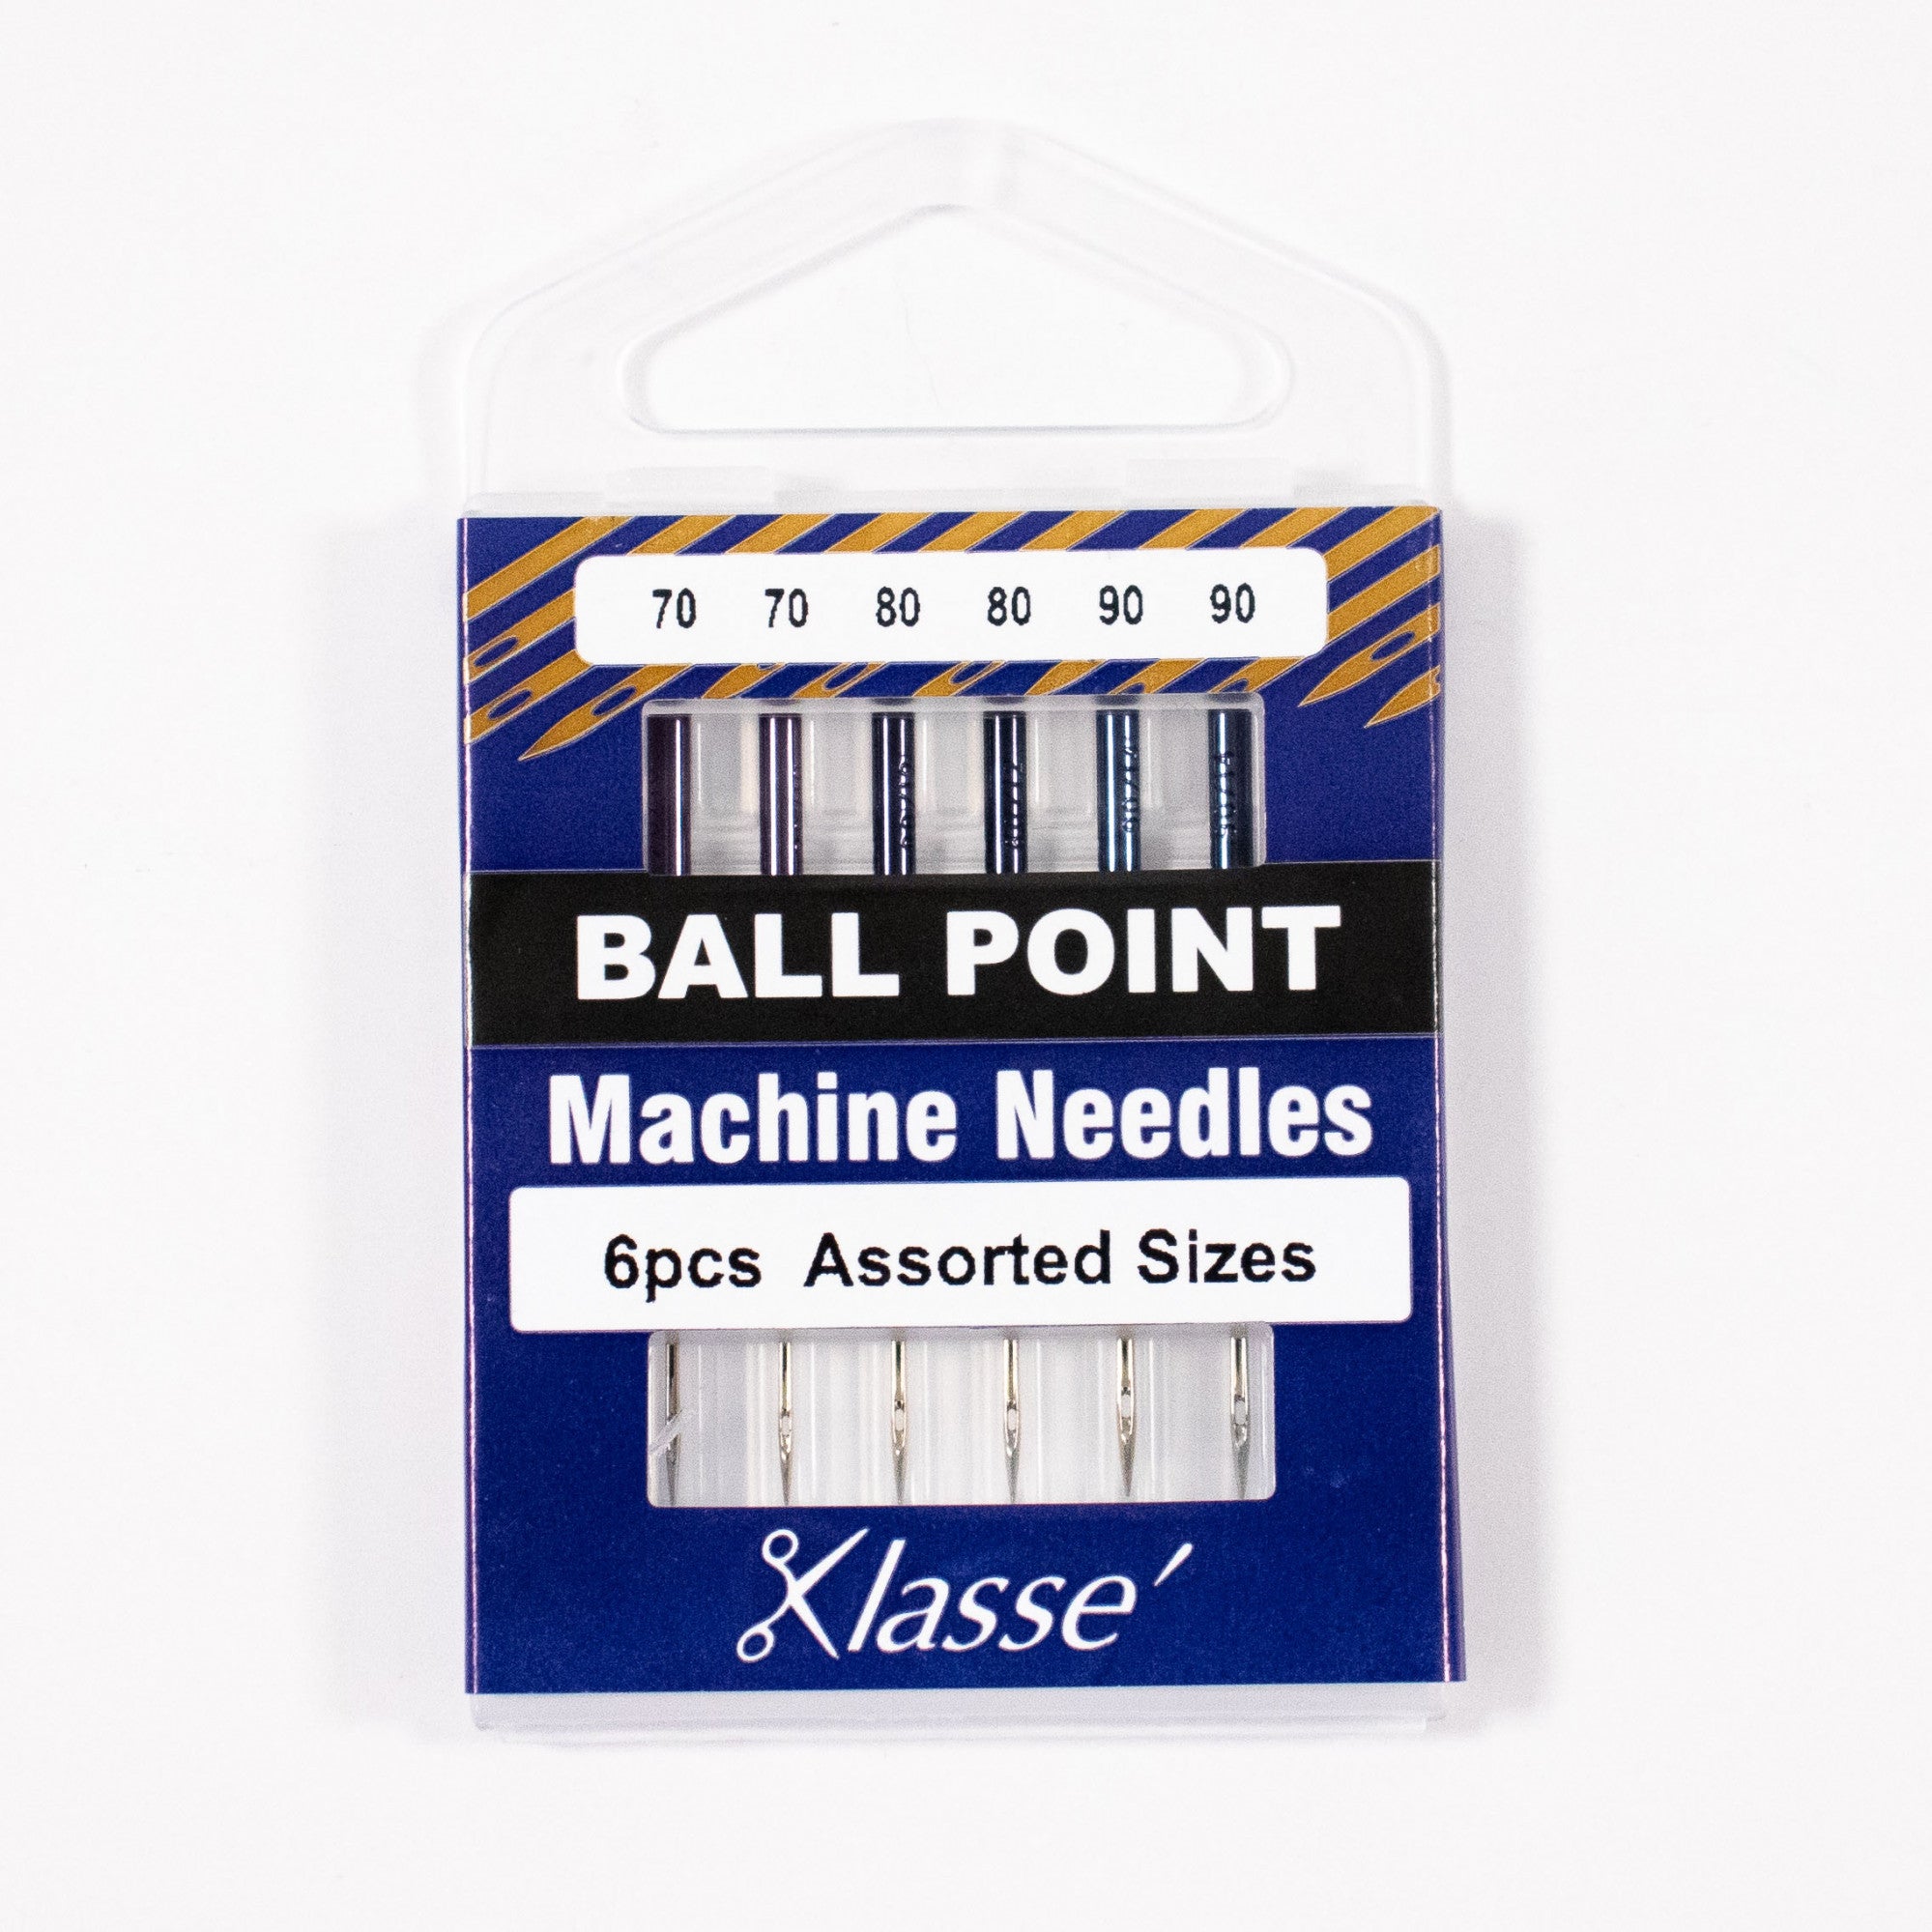 Ball Point Needle Asst 70/10 (x2), 80/12 (x2), 90/14 (x2), Pkg.5